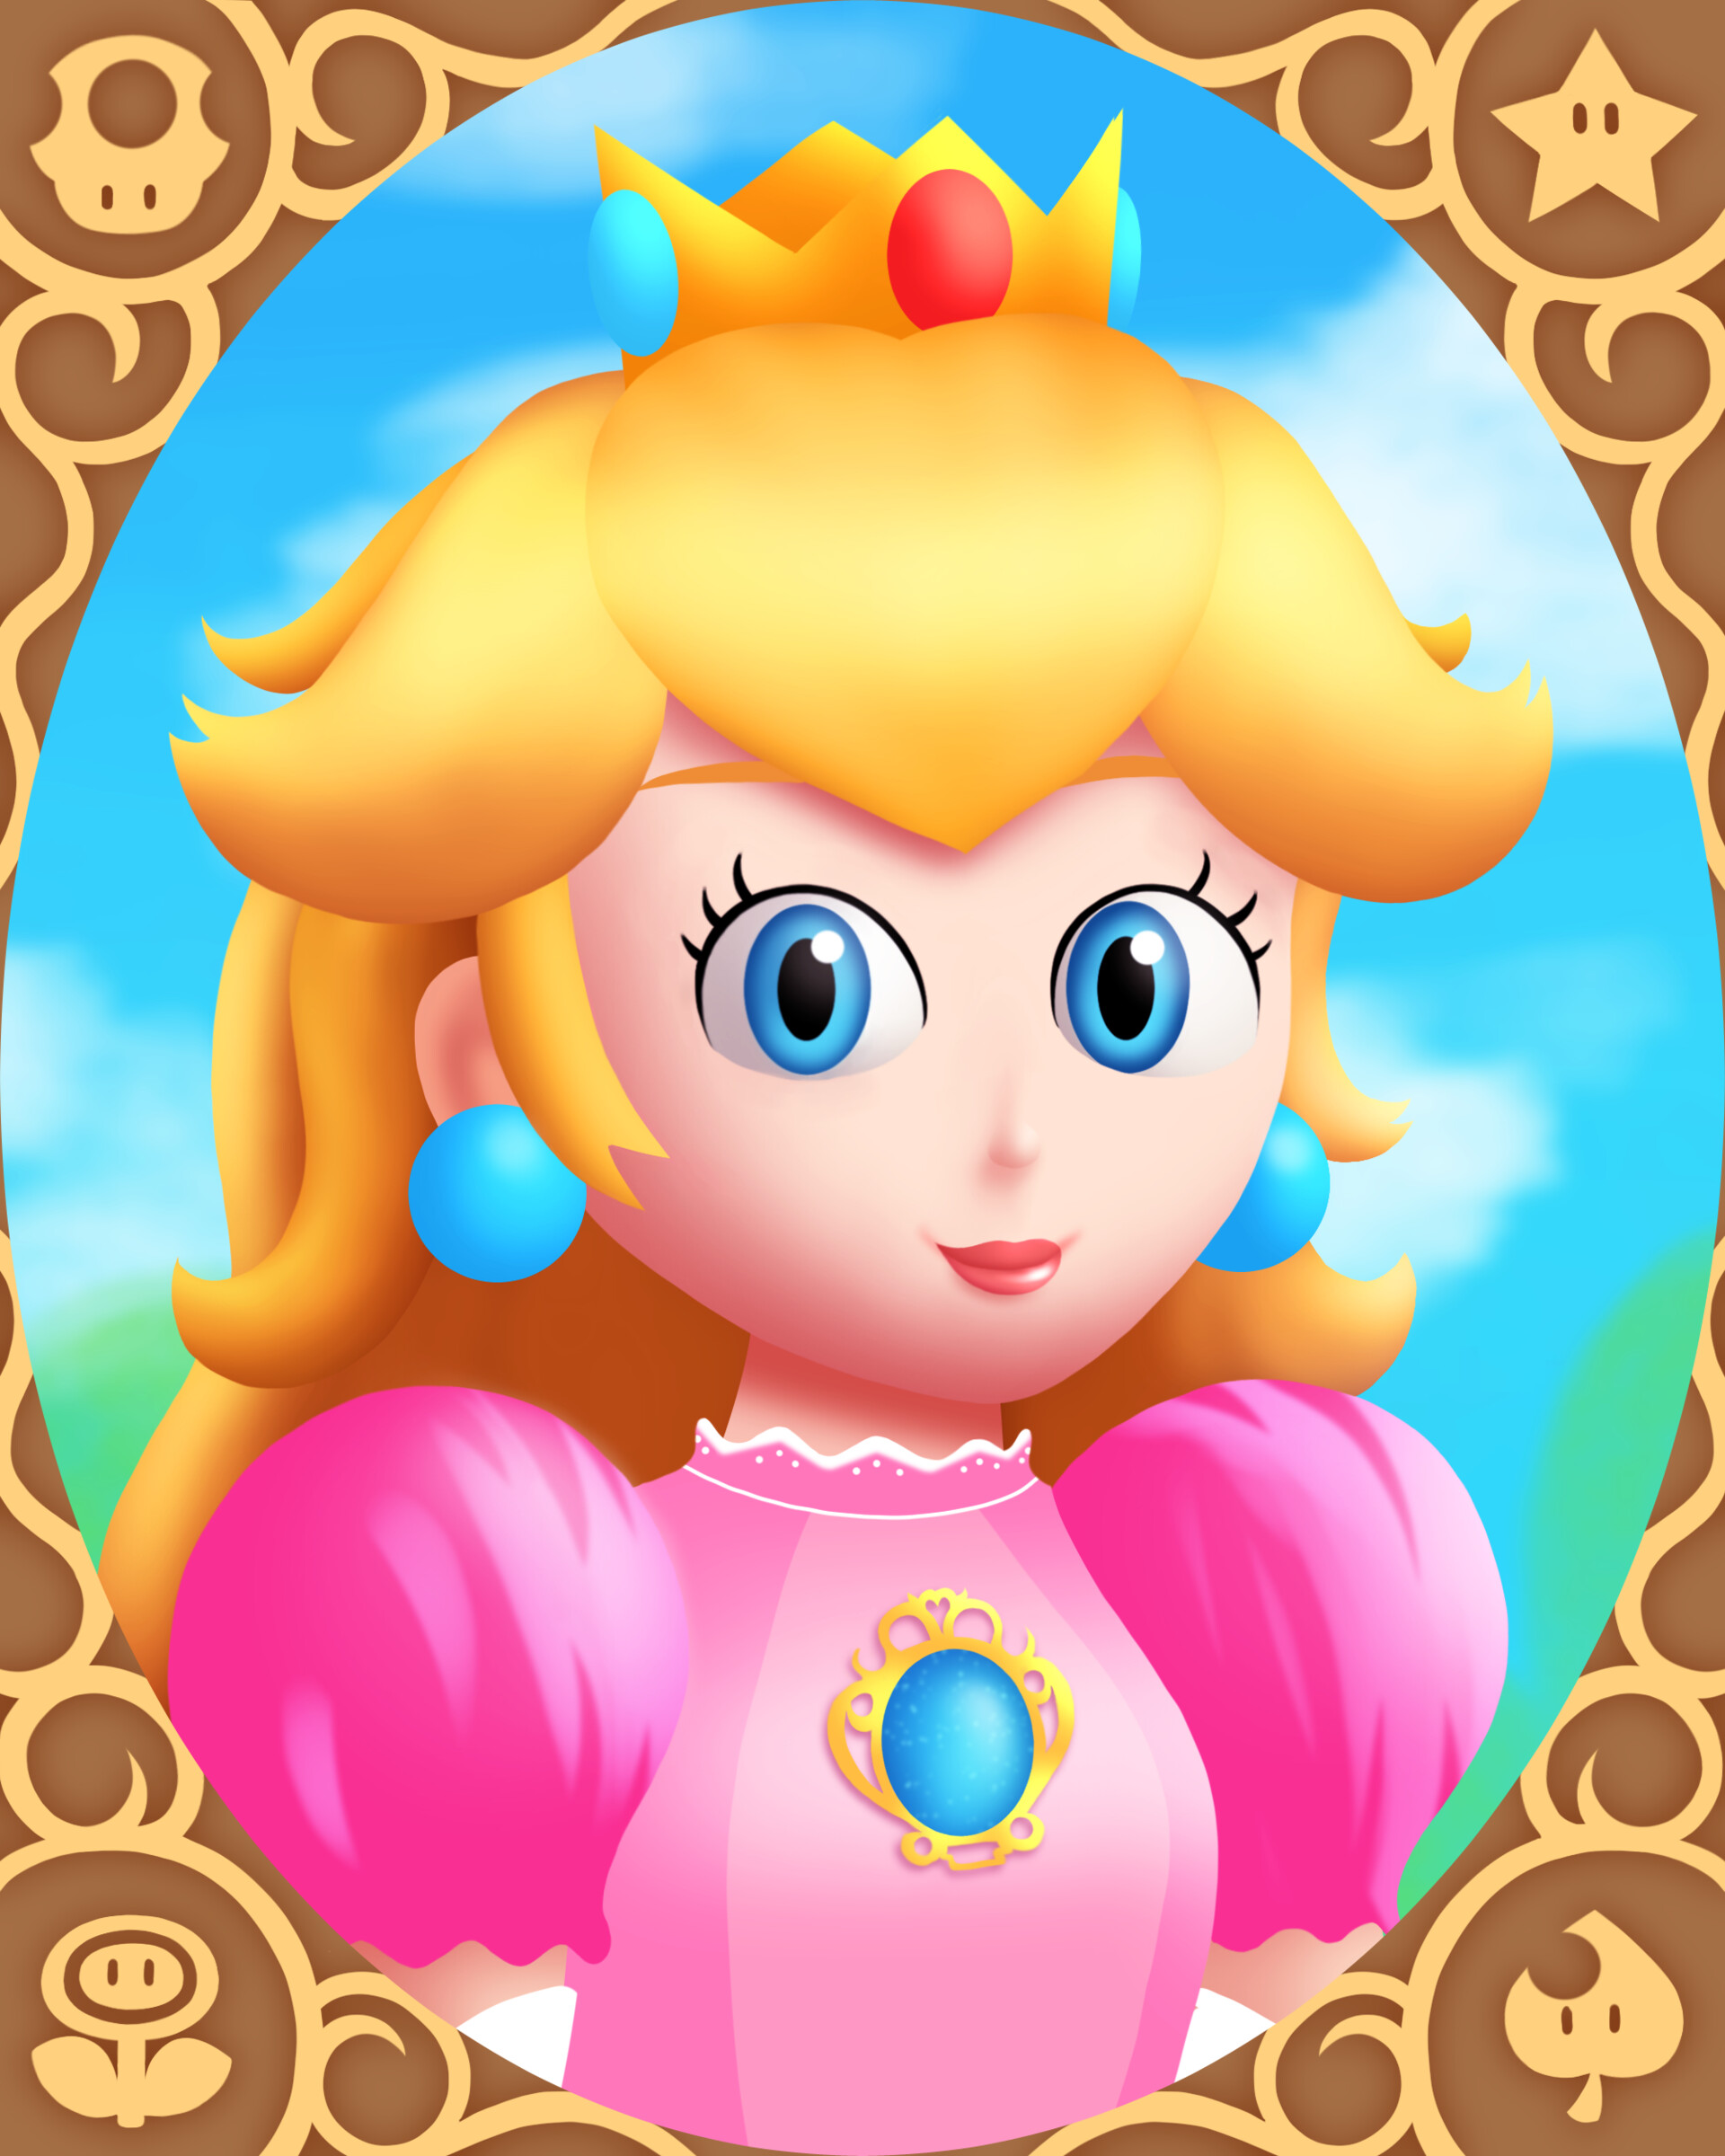 Princess Peach from Super Mario Bros.